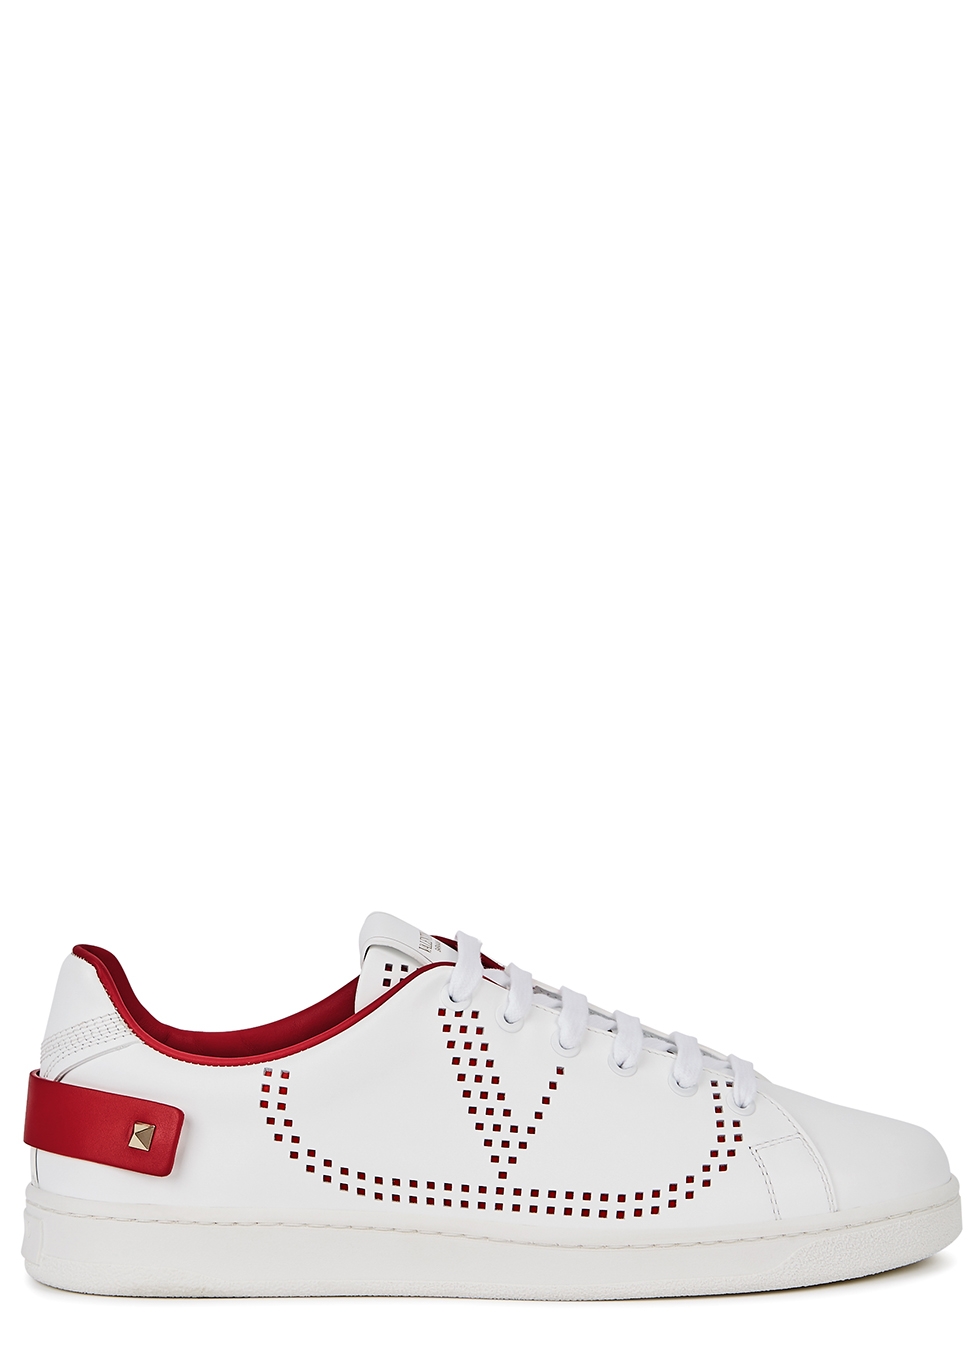 valentino garavani red shoes